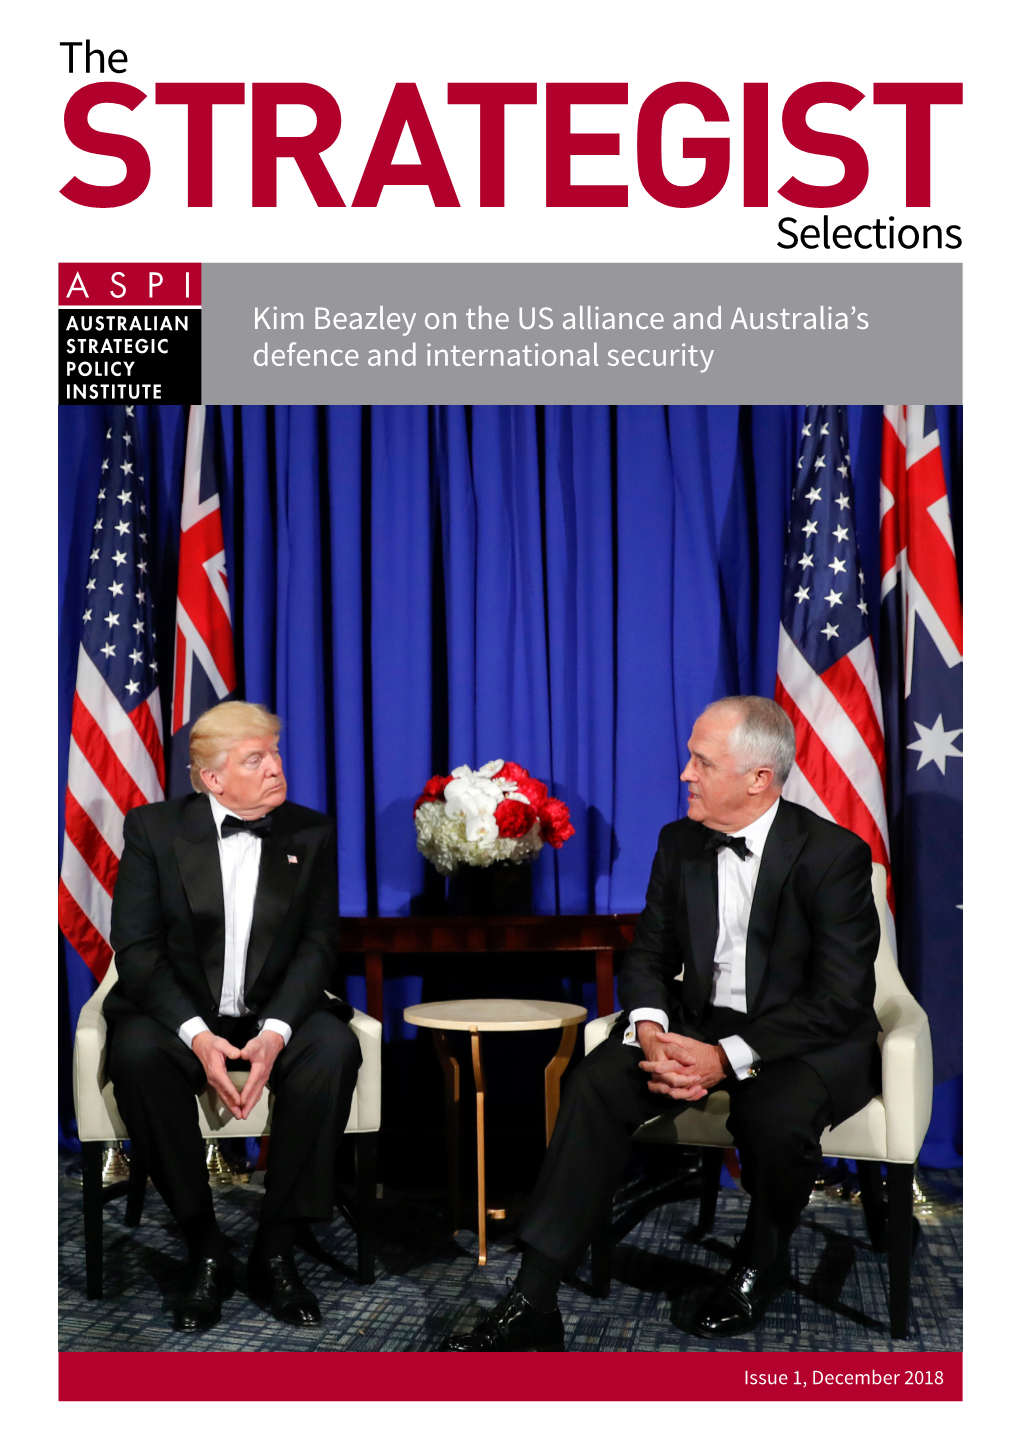 Kim Beazley on the US Alliance and Australia's Defence And